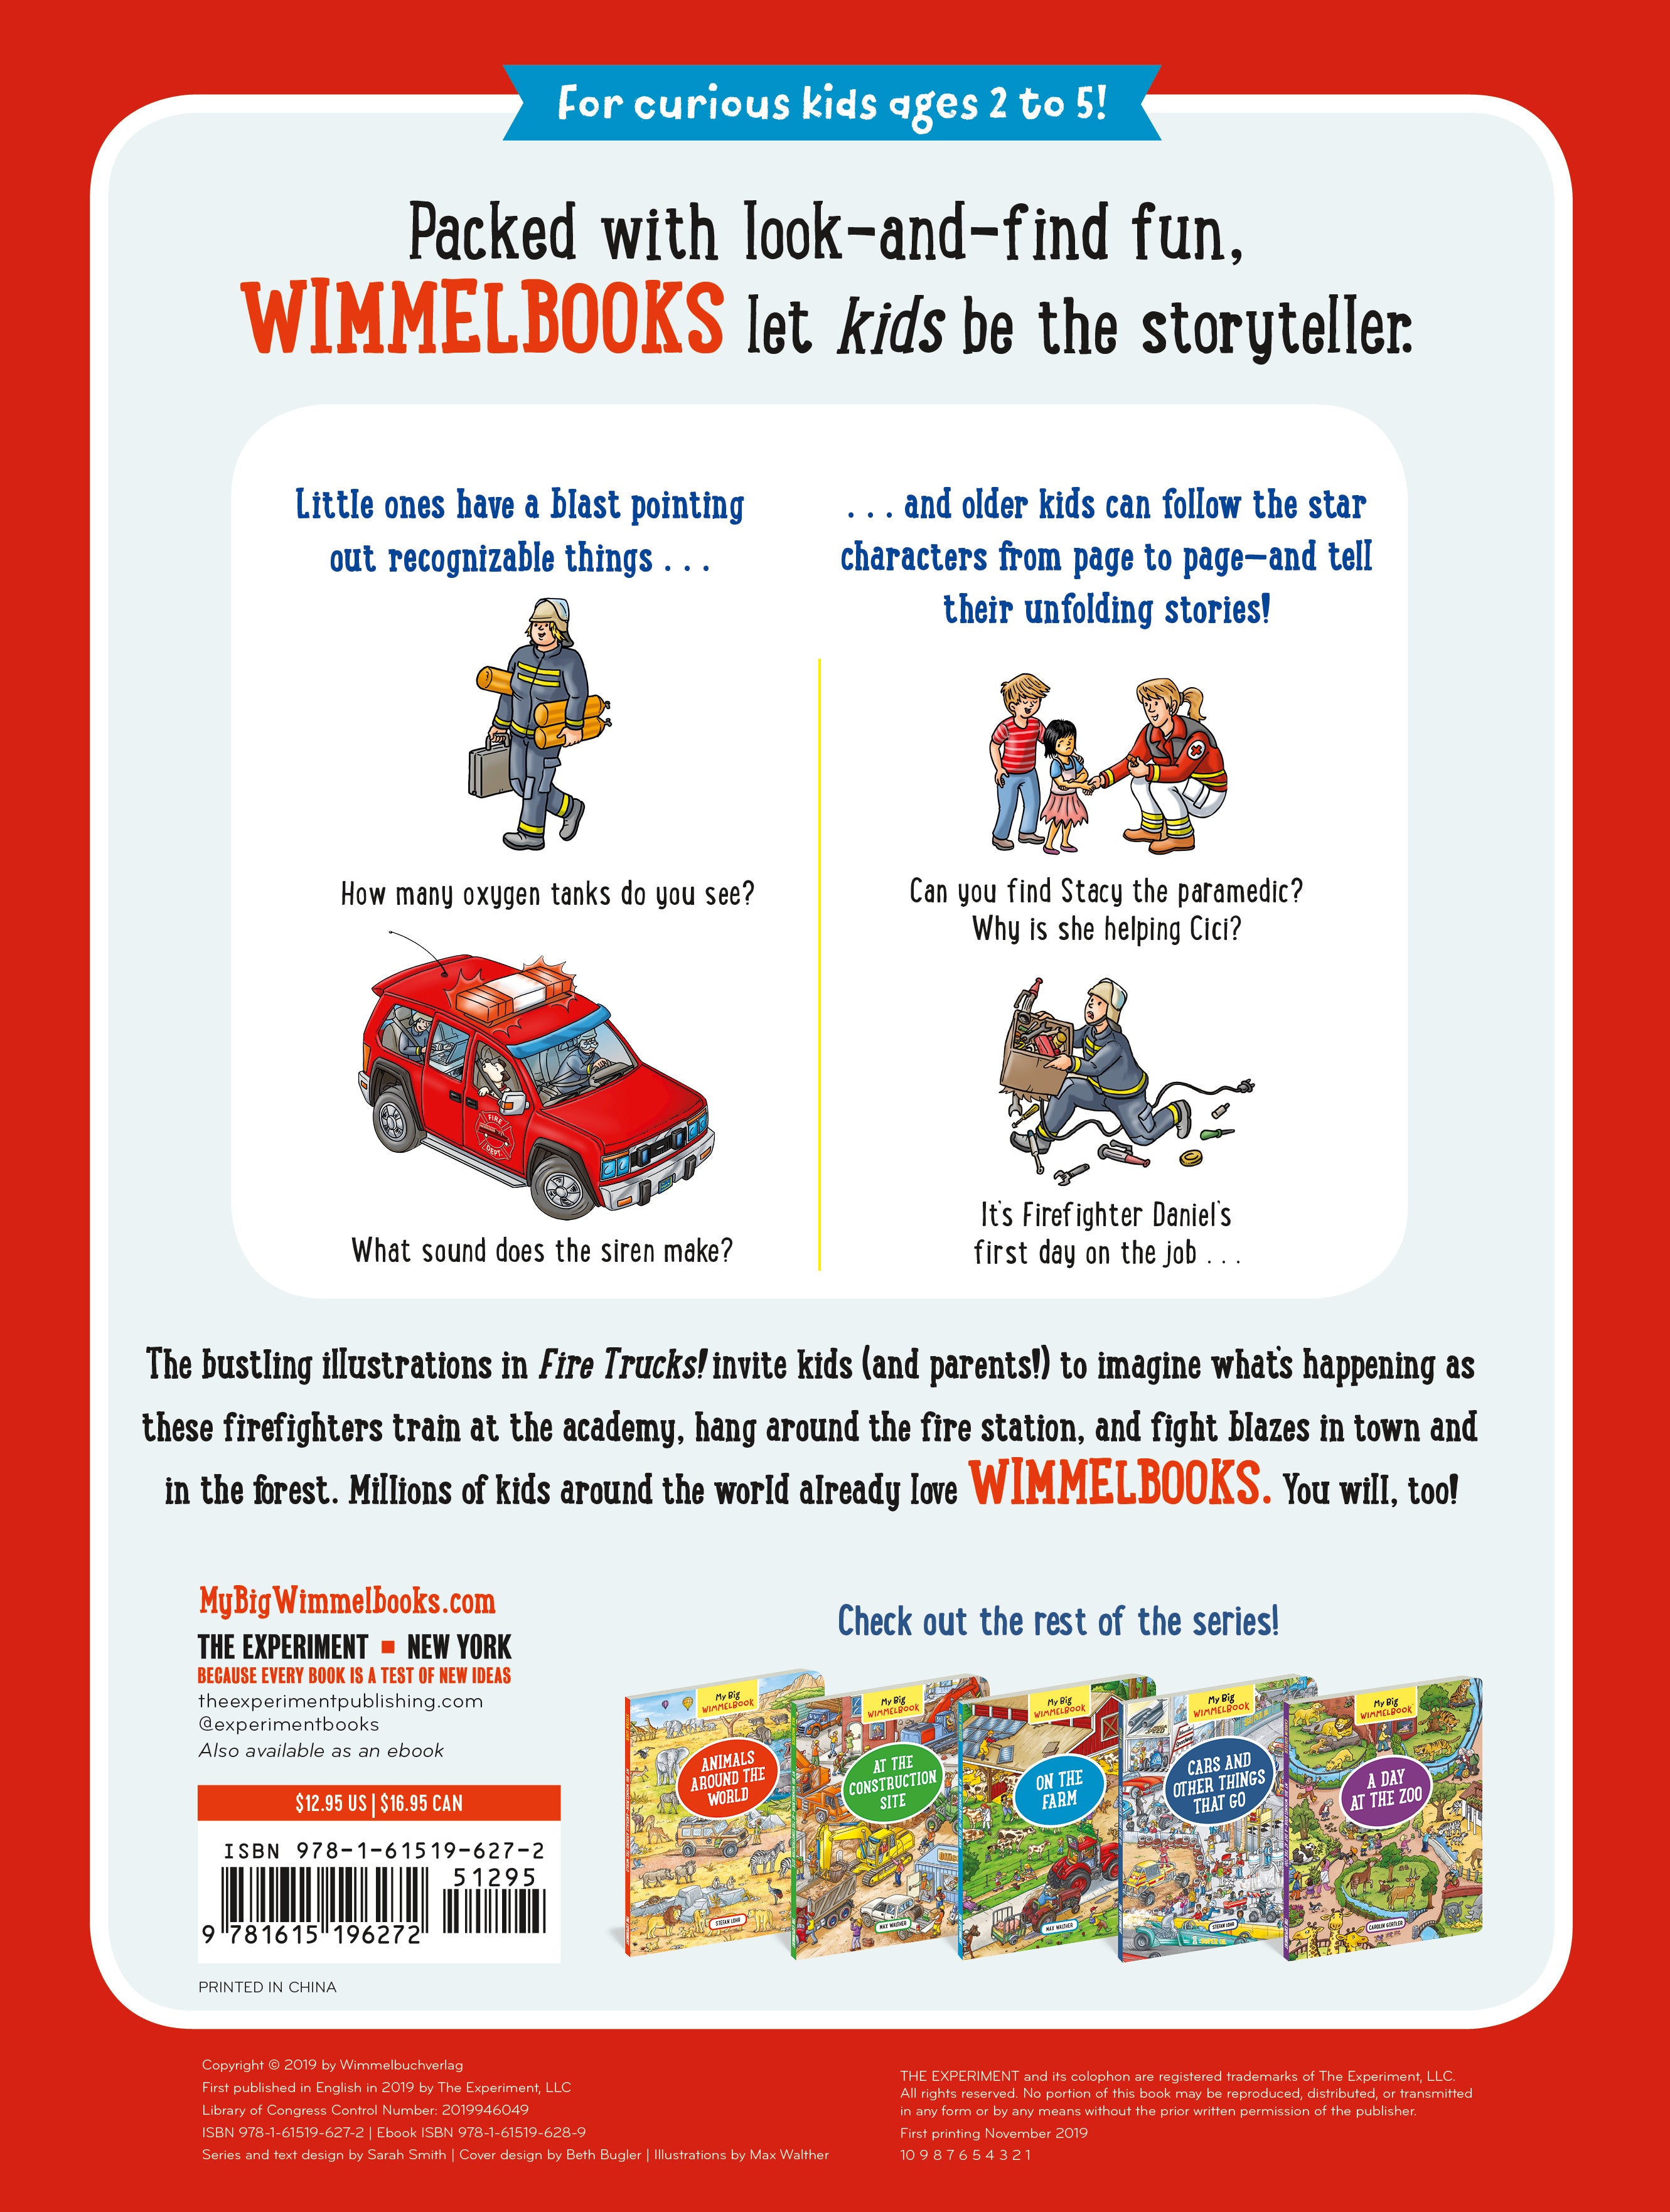 My Big Wimmelbook-Fire Trucks! - Stefan Lohr - The English Bookshop